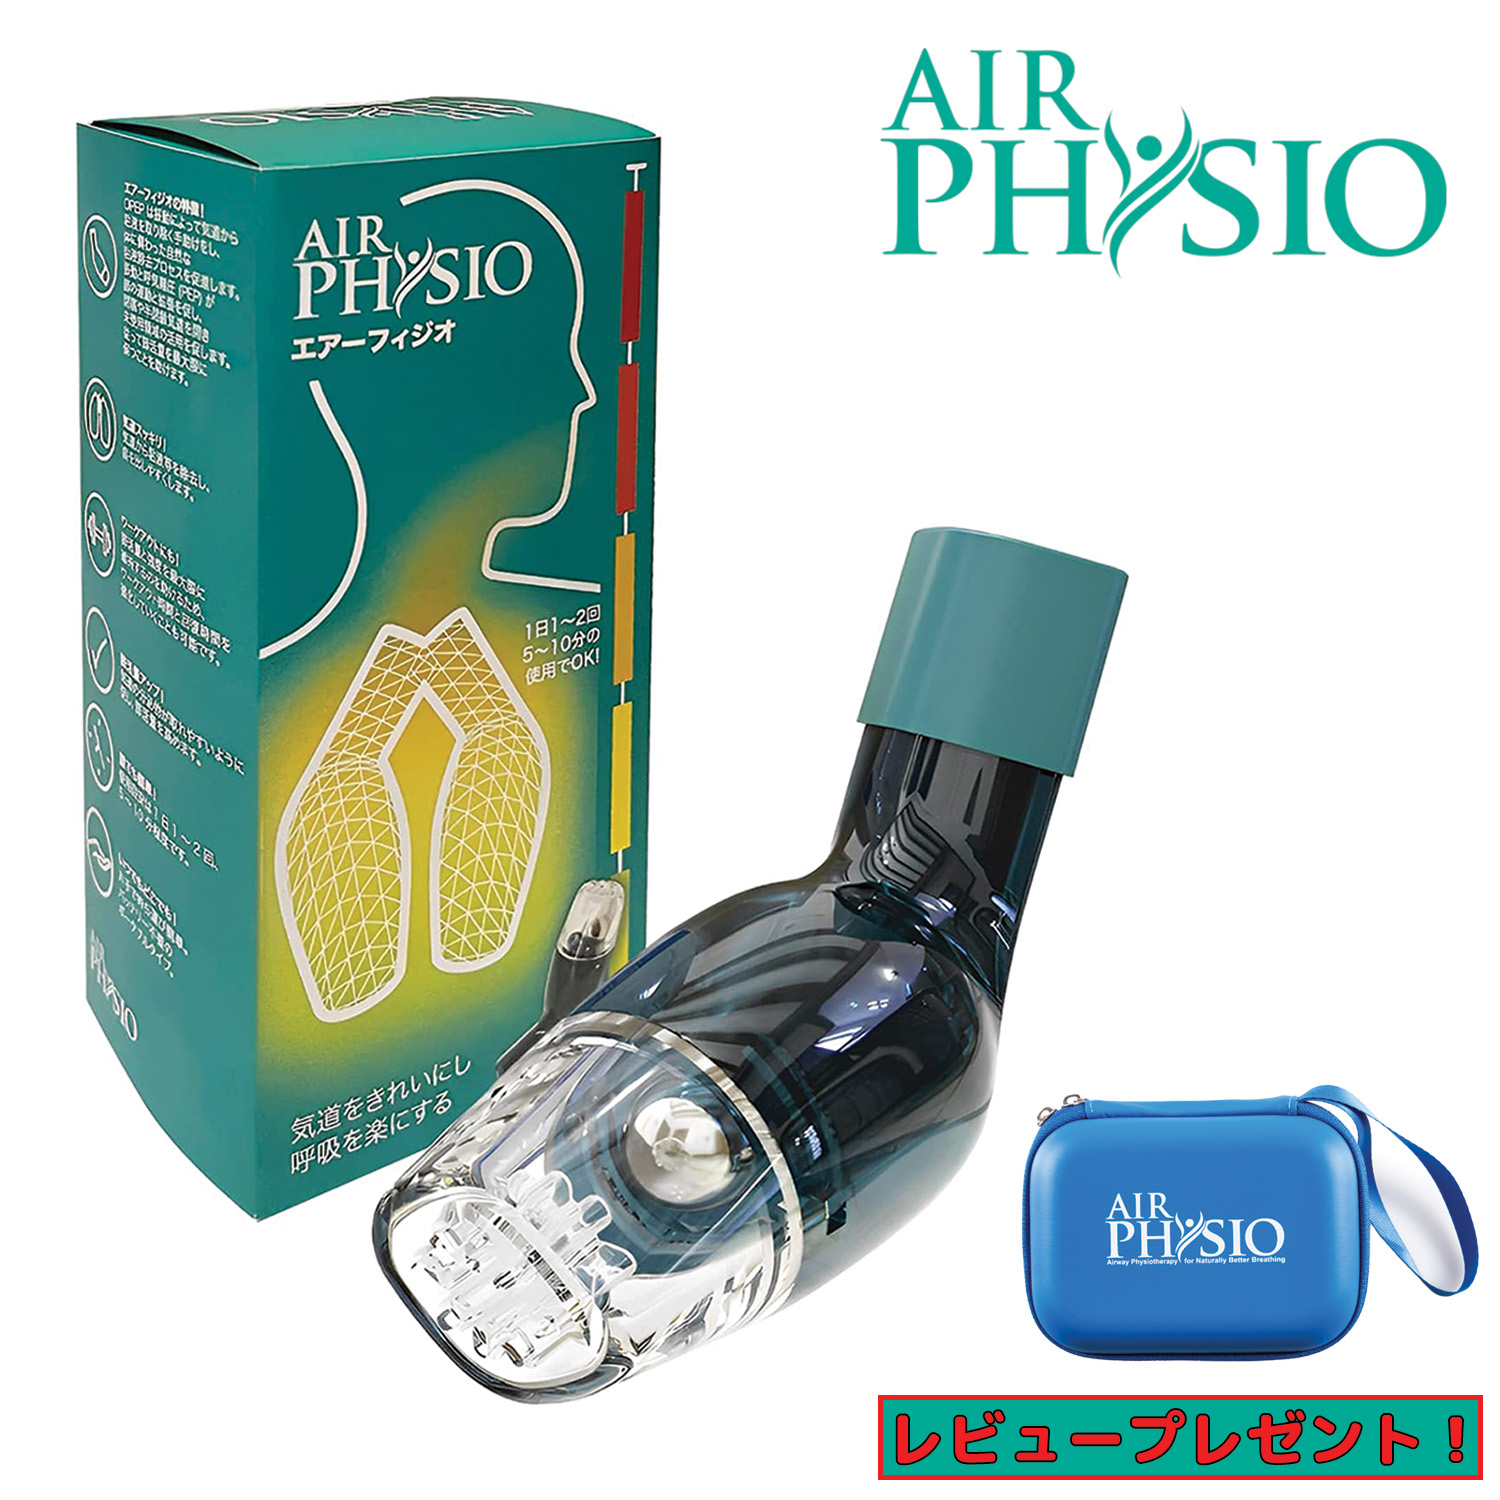 Airphysio エアーフィジオ1本 呼吸器 一般医療機器 オーストラリア製品 使いやすい 呼吸筋 肺を拡げ 肺活量 排痰介助 気道確保 子供用　大人用　老人用　アスリート用　パフォーマンストレーニング用